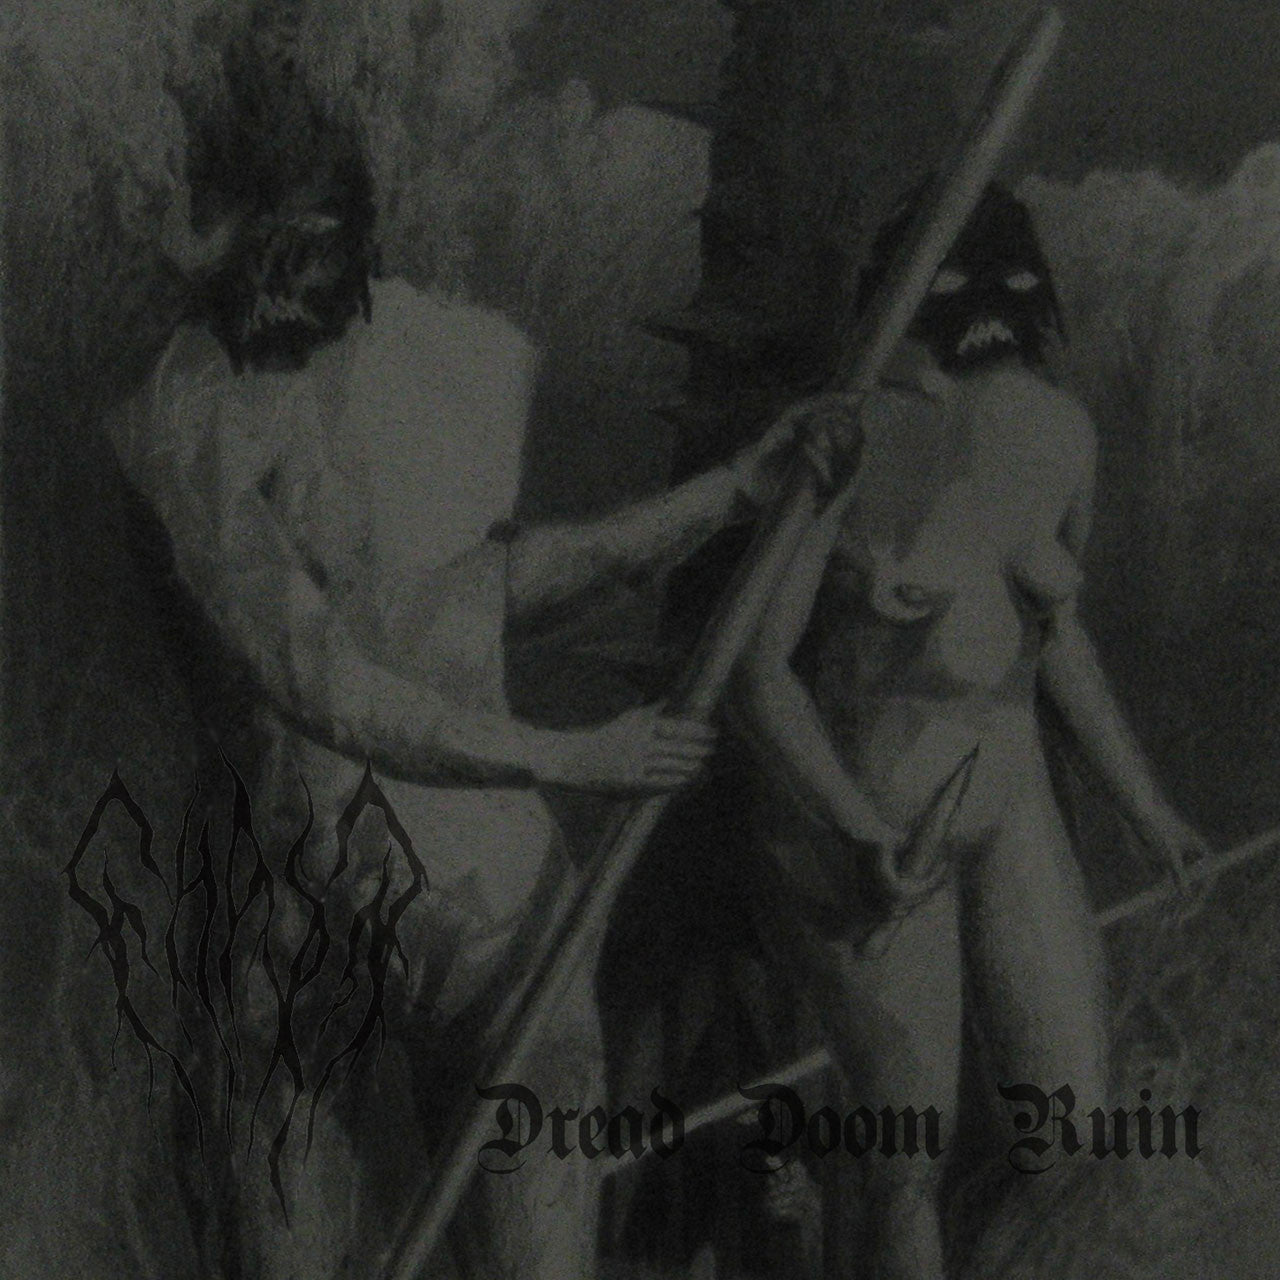 Ghast - Dread Doom Ruin (Digipak CD)